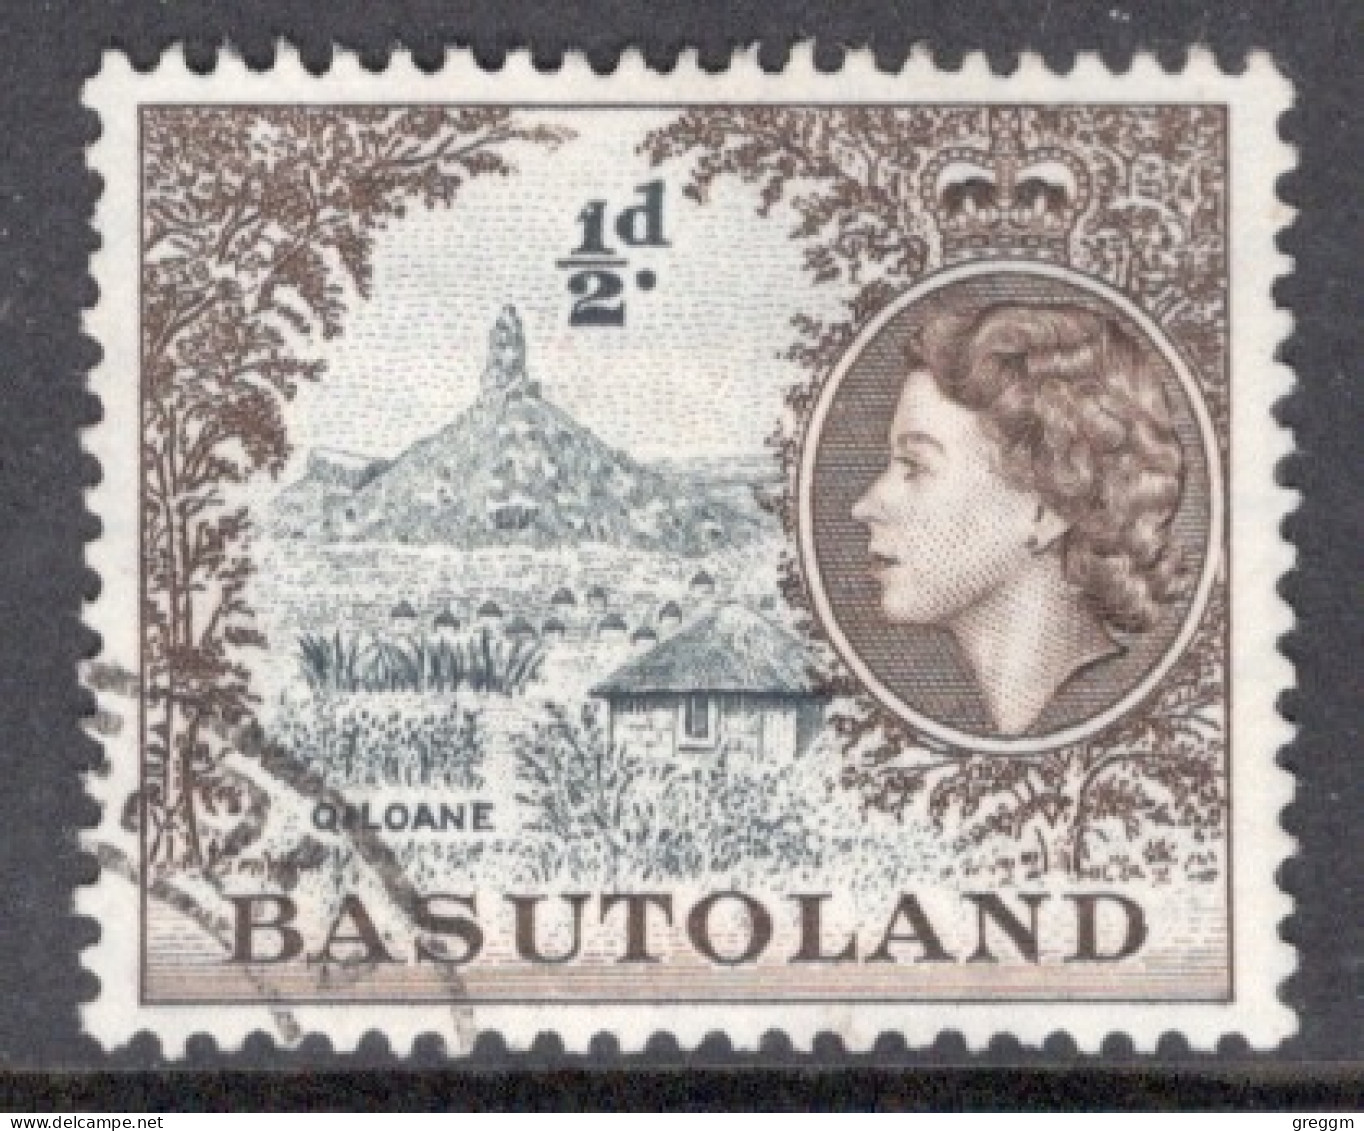 Basutoland 1954 Single ½d Stamp From The Queen Elizabeth Definitive Set. - 1933-1964 Kolonie Van De Kroon